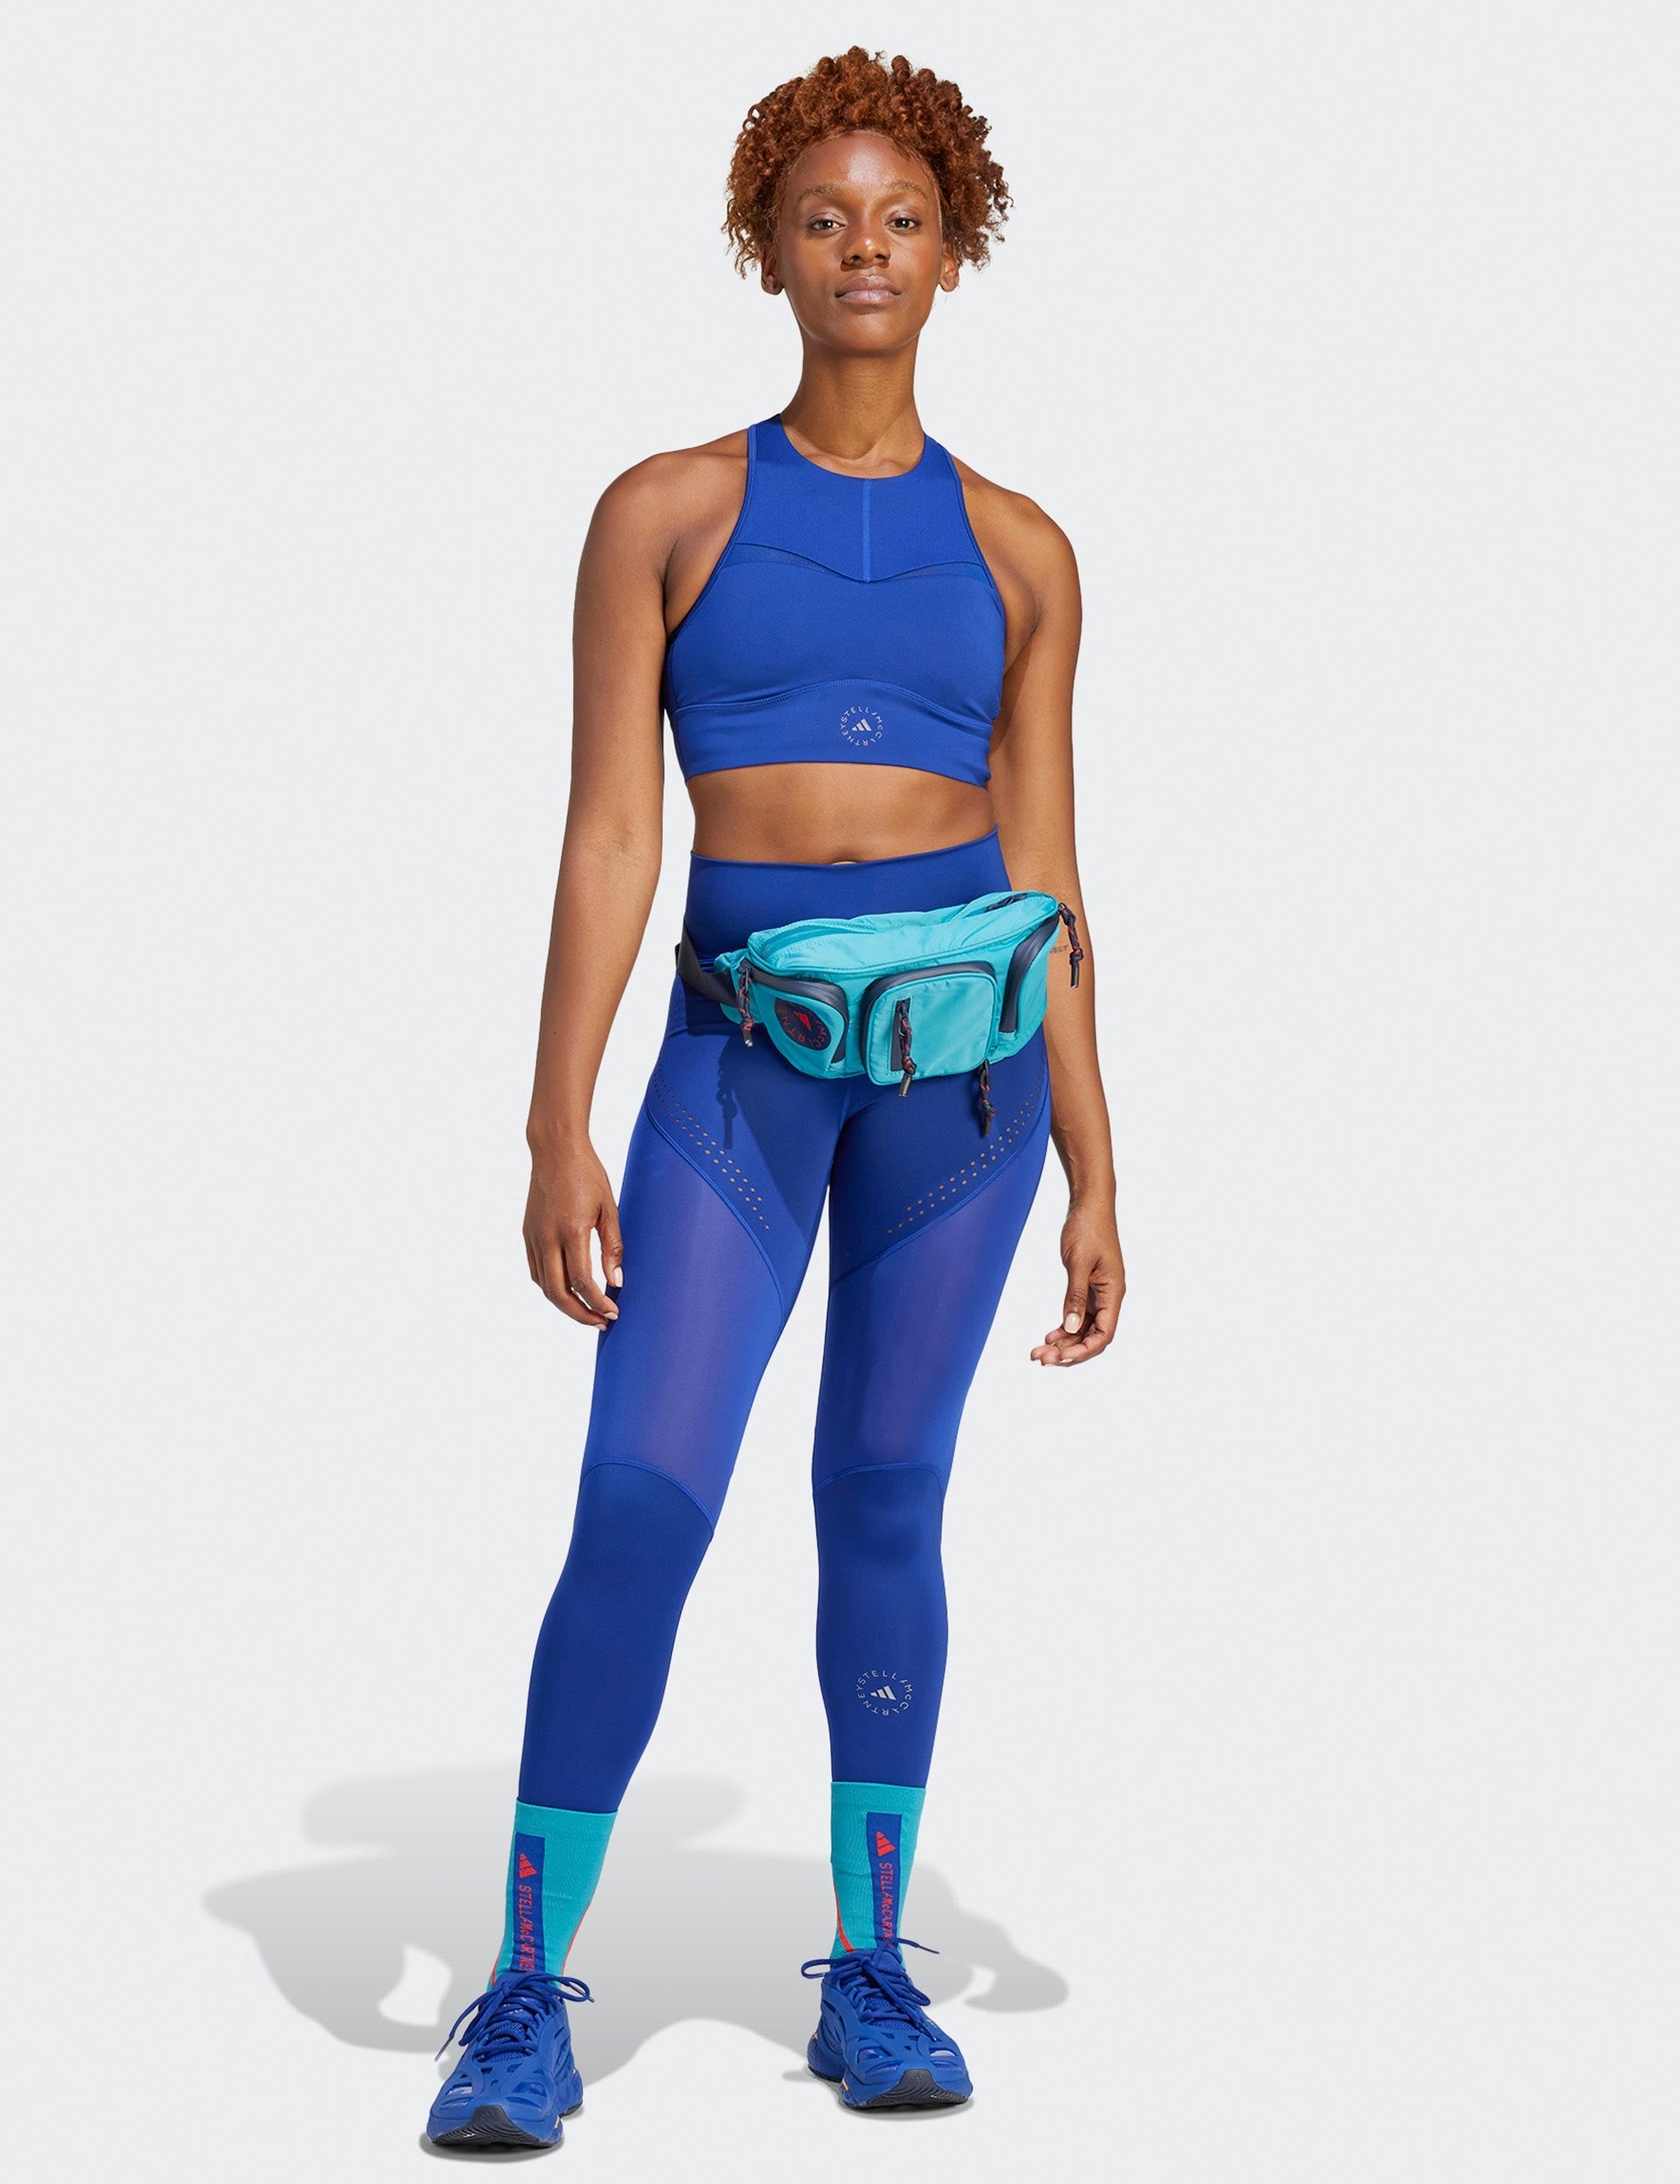 adidas by Stella McCartney 'Run' Performance Tank  Gym clothes women,  Workout attire, Stella mccartney adidas